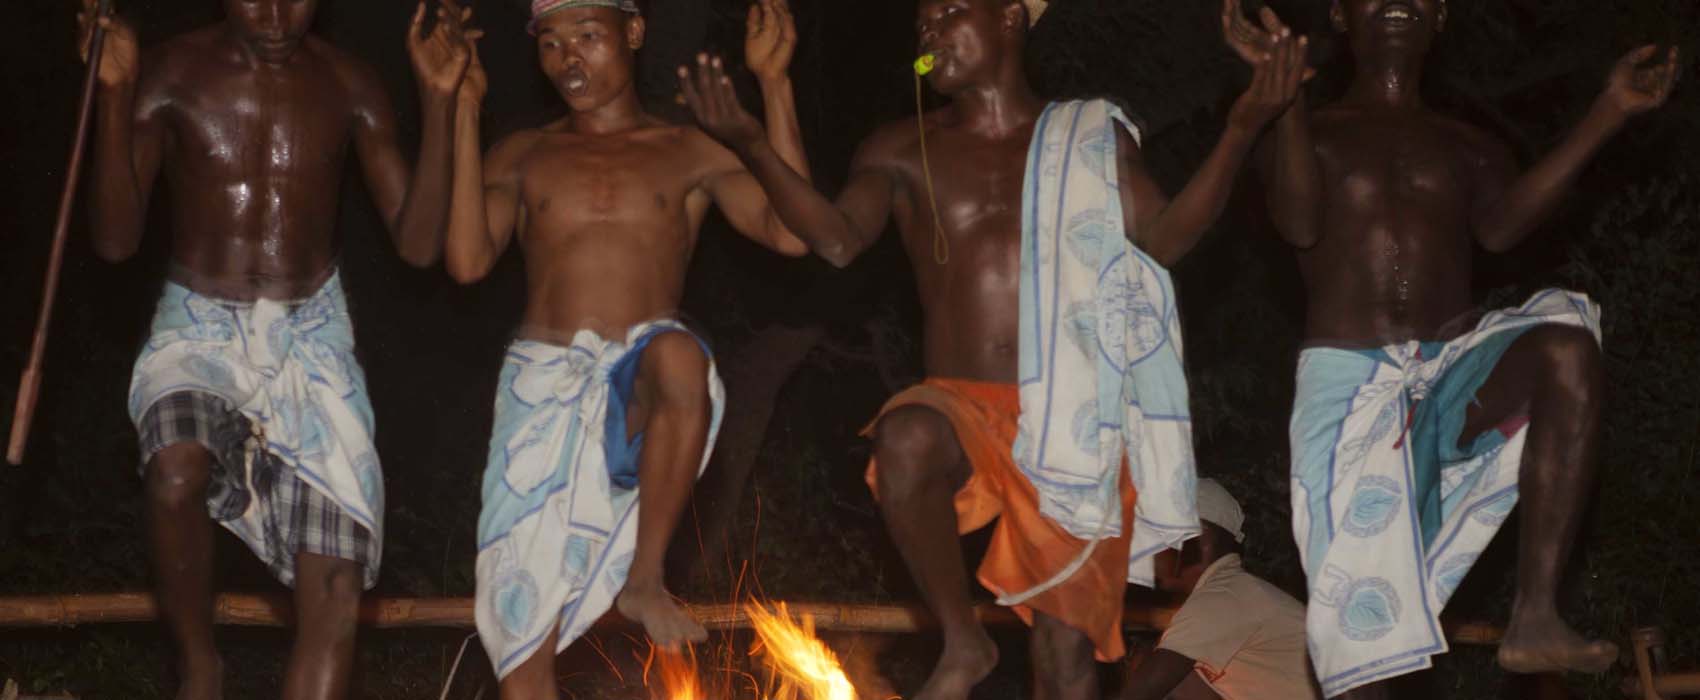 African Madagascar Safari tribe